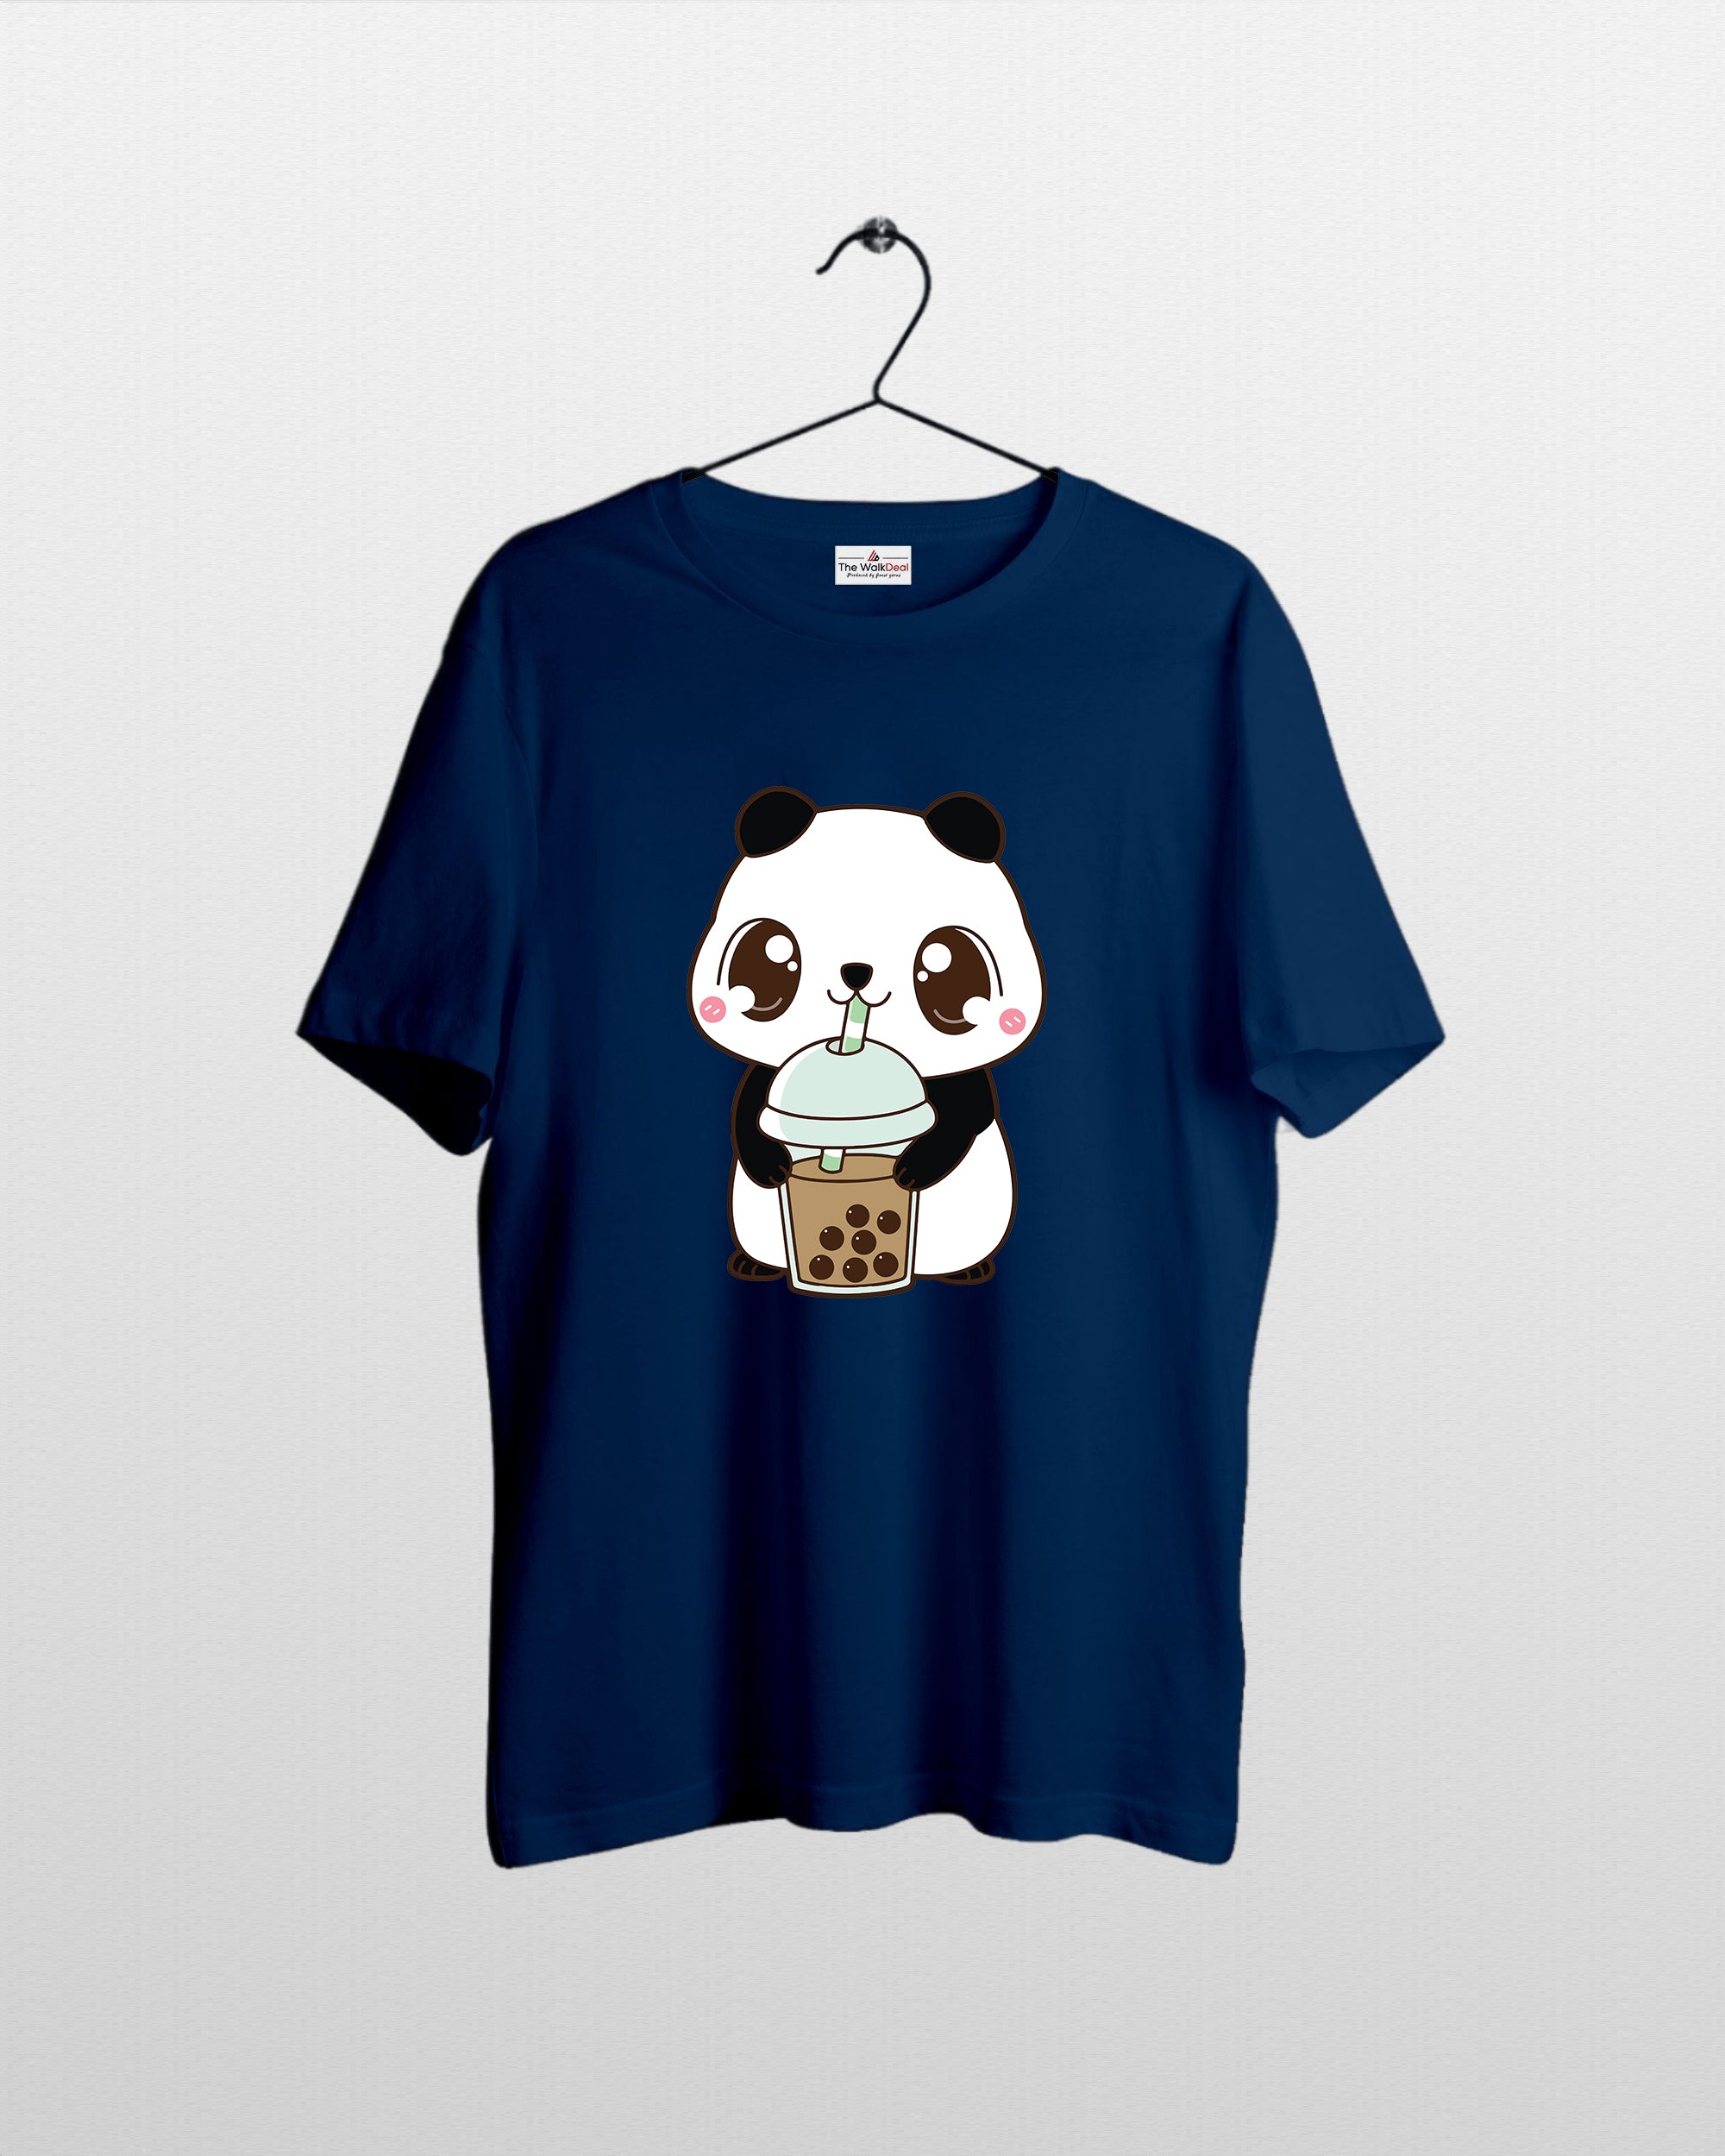 Panda T-Shirts For Men || Navy Blue || Stylish Tshirts || 100% Cotton || Best T-Shirt For Men's